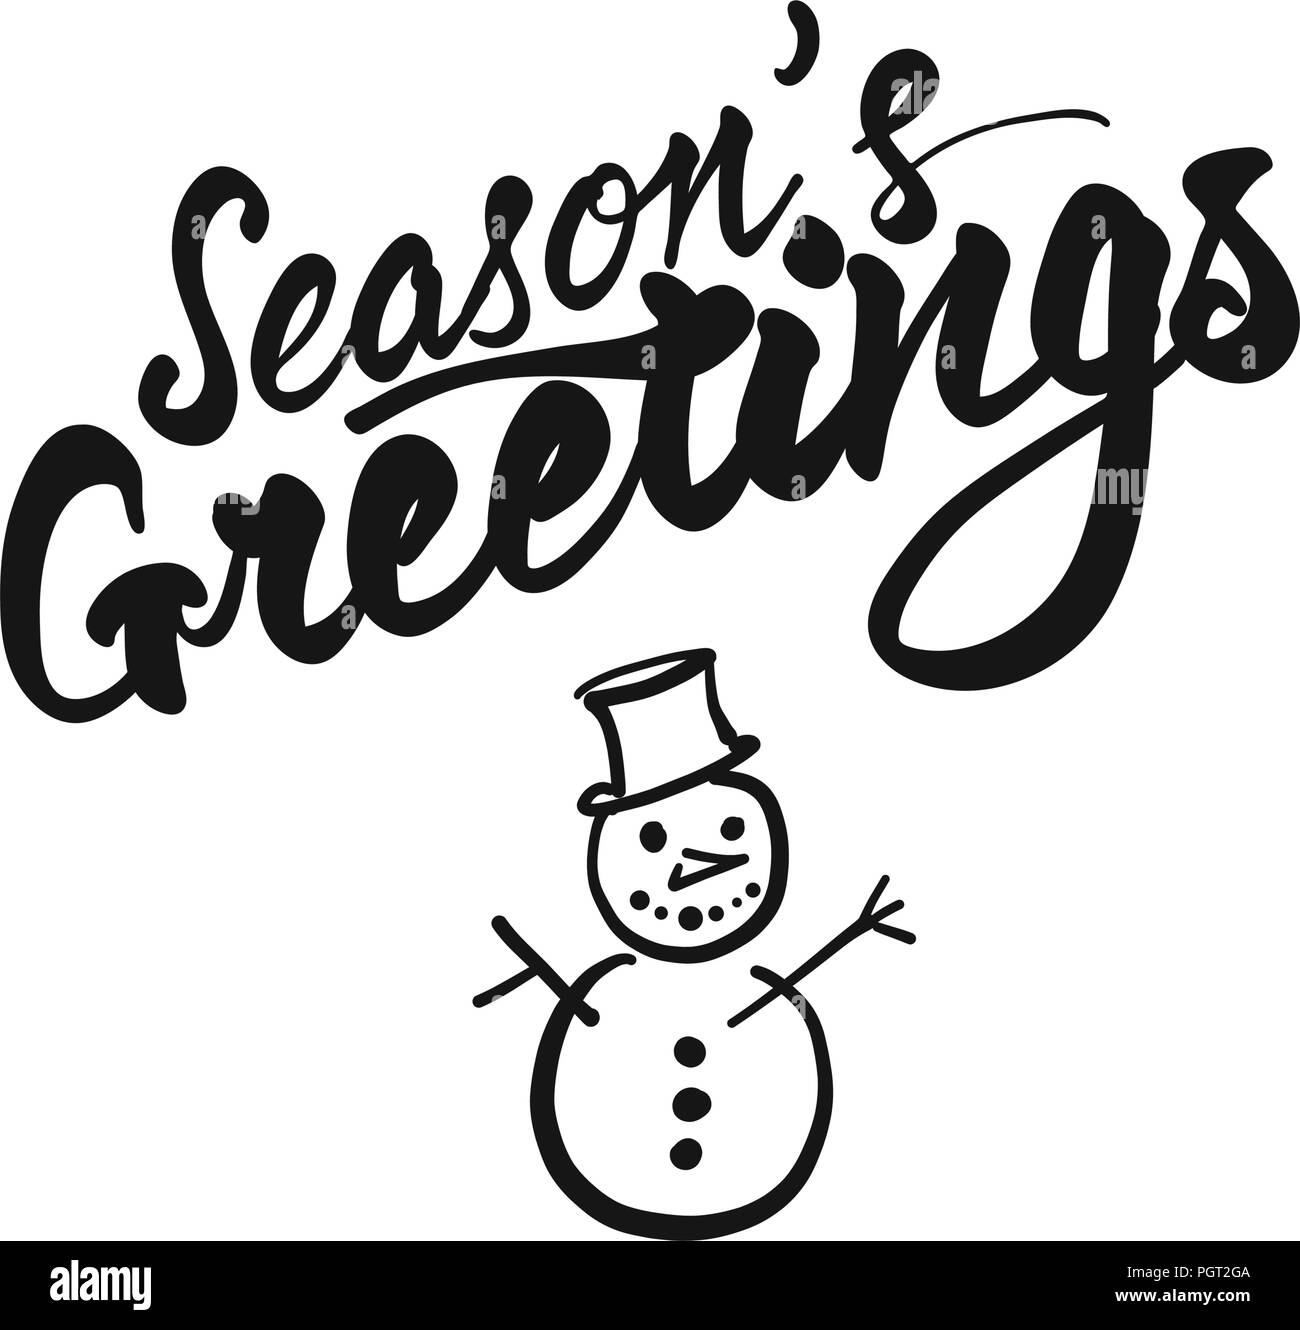 Seasons Greetings lettering. Nice seasonal calligraphic artwork for greeting cards. Hand-drawn vector sketch. Stock Vector